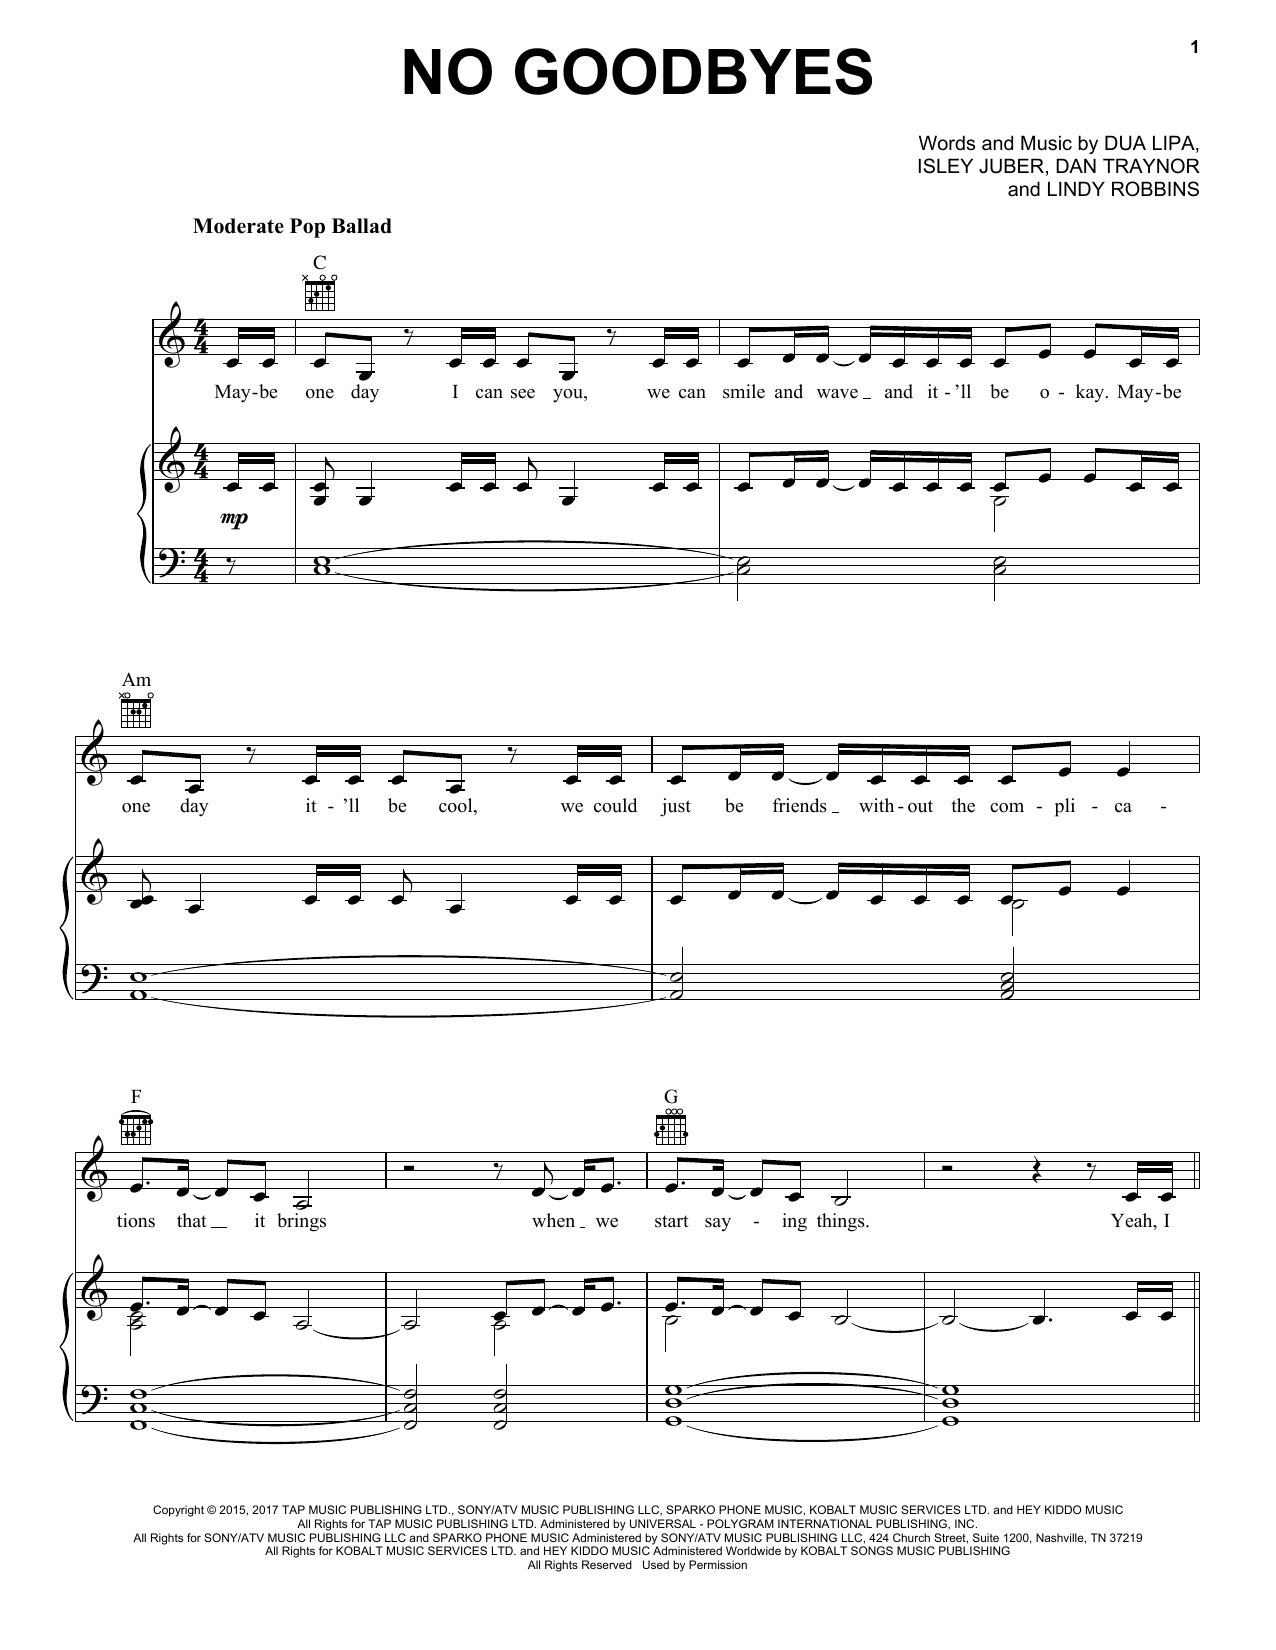 Dua Lipa No Goodbyes Sheet Music Notes & Chords for Piano, Vocal & Guitar (Right-Hand Melody) - Download or Print PDF